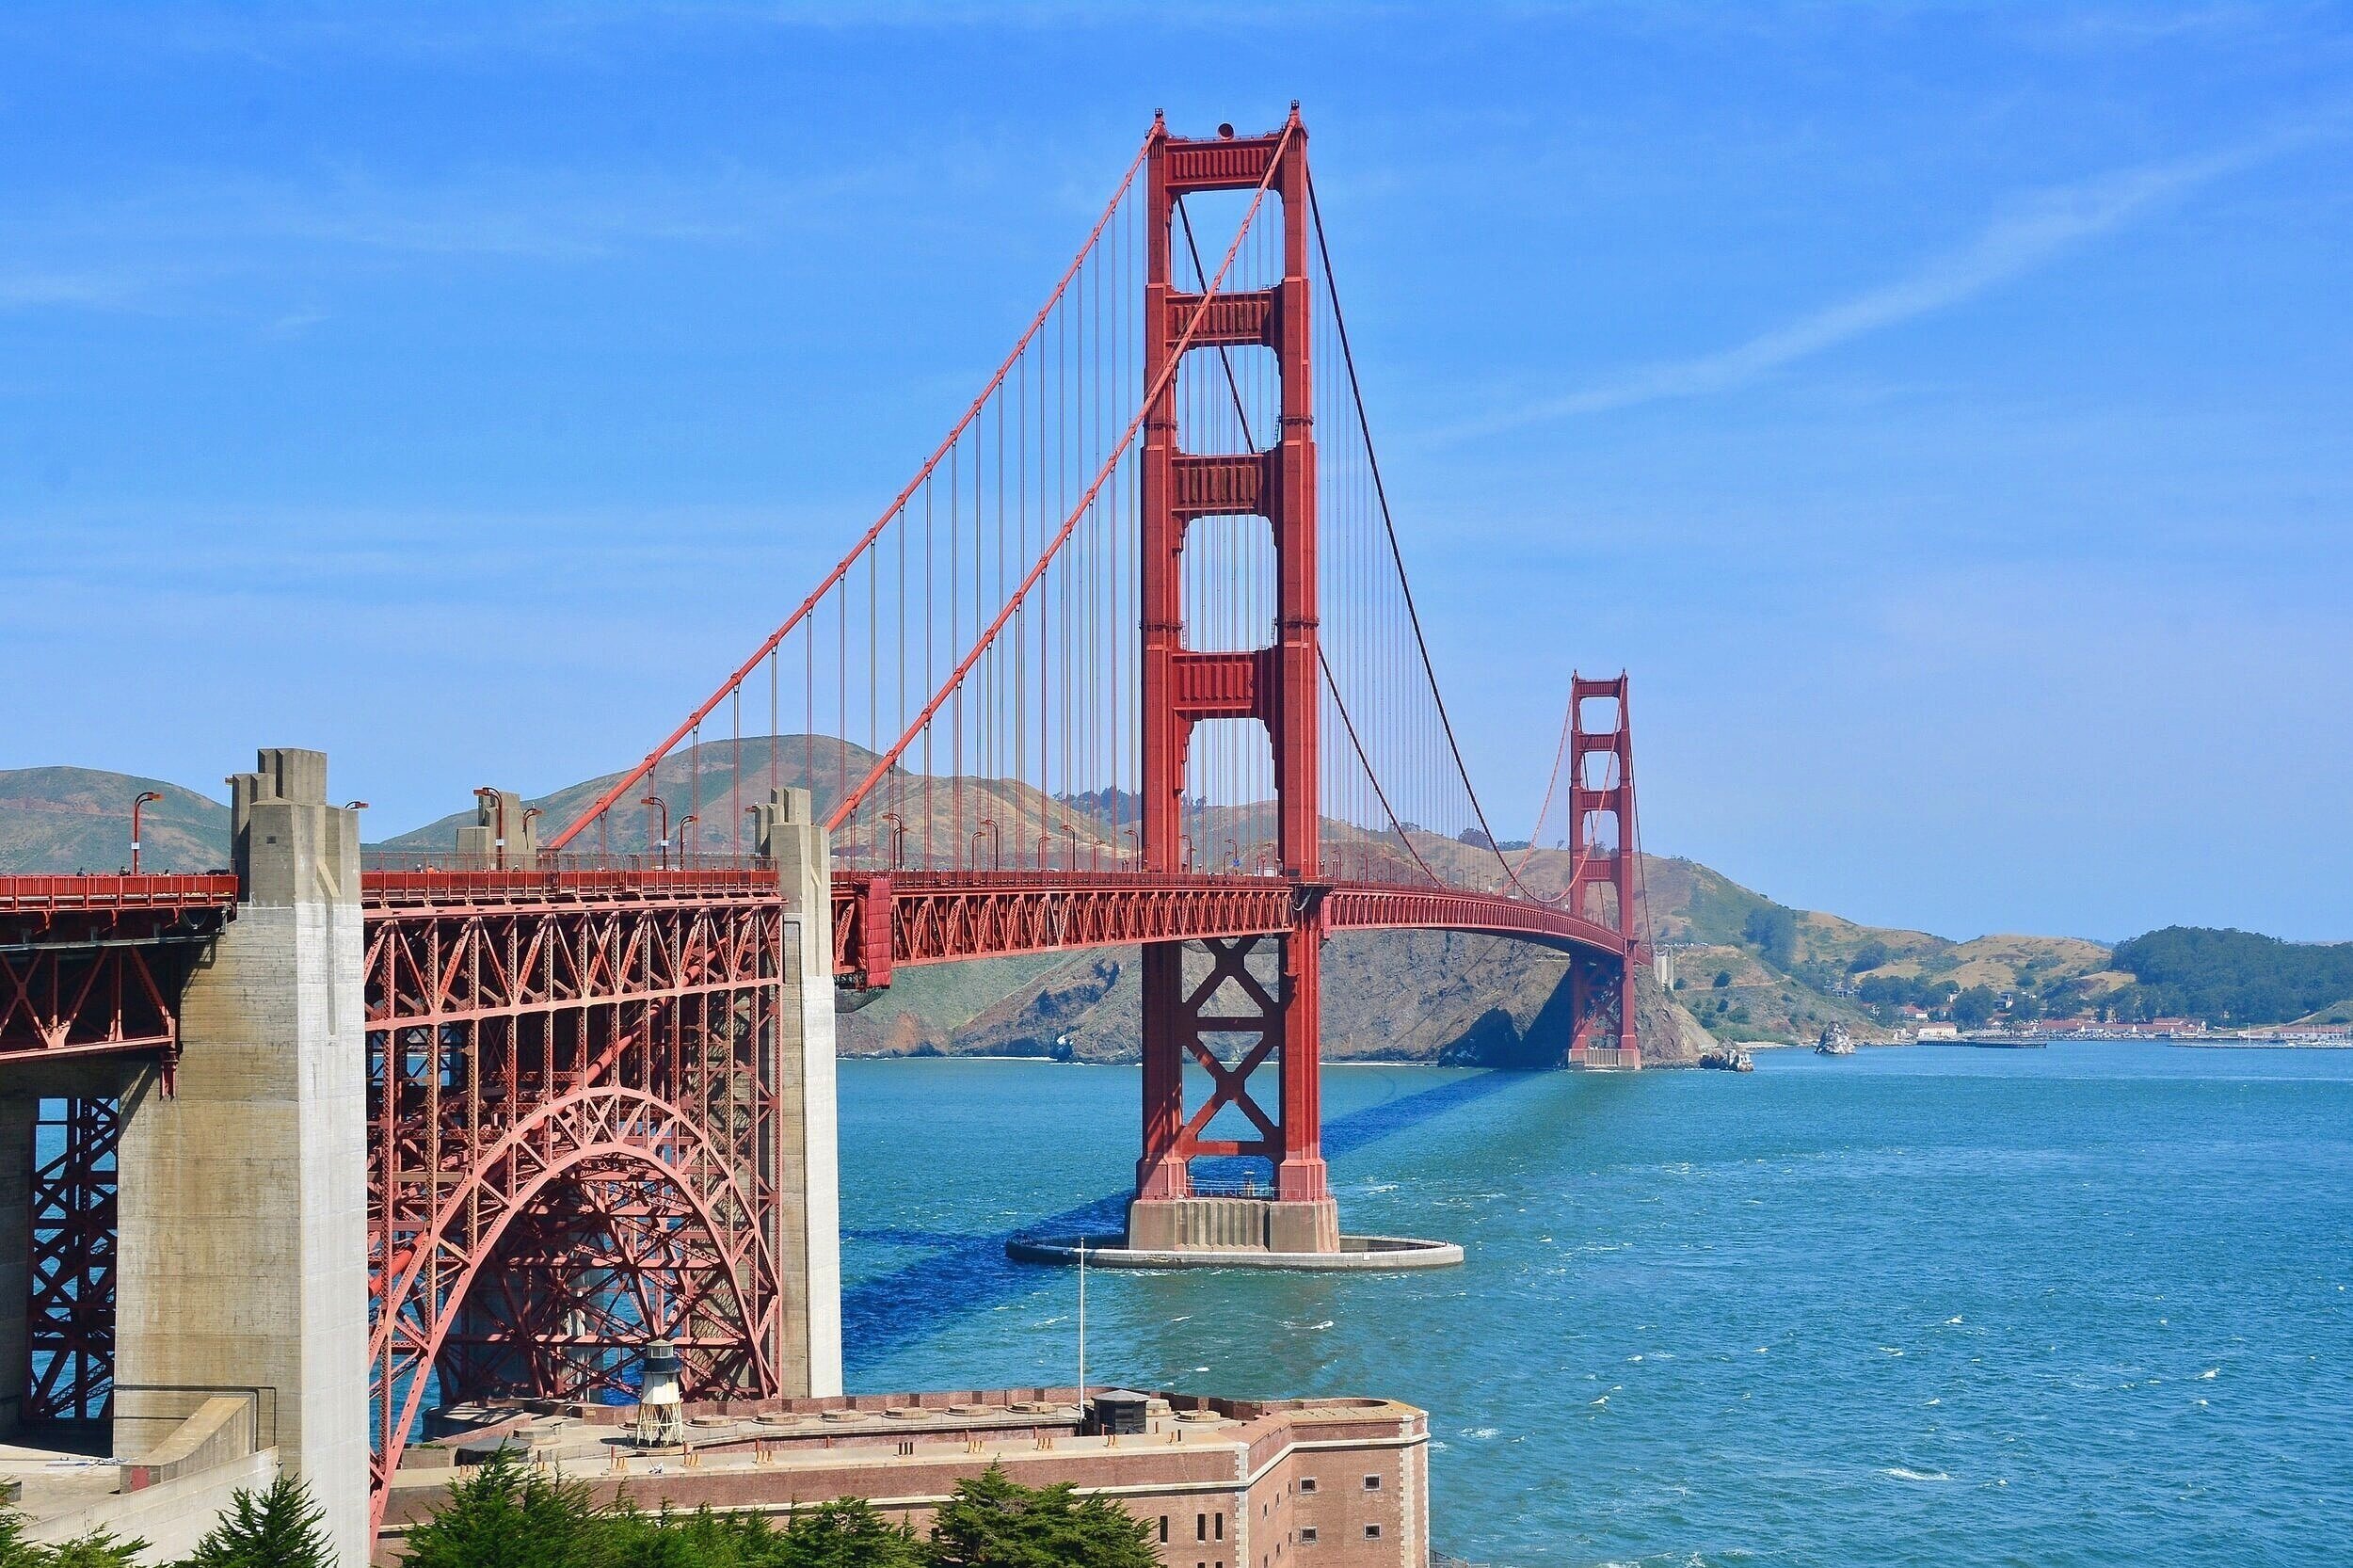 Crystal San Francisco Golden Gate Bridge Replica Elegant Souvenir